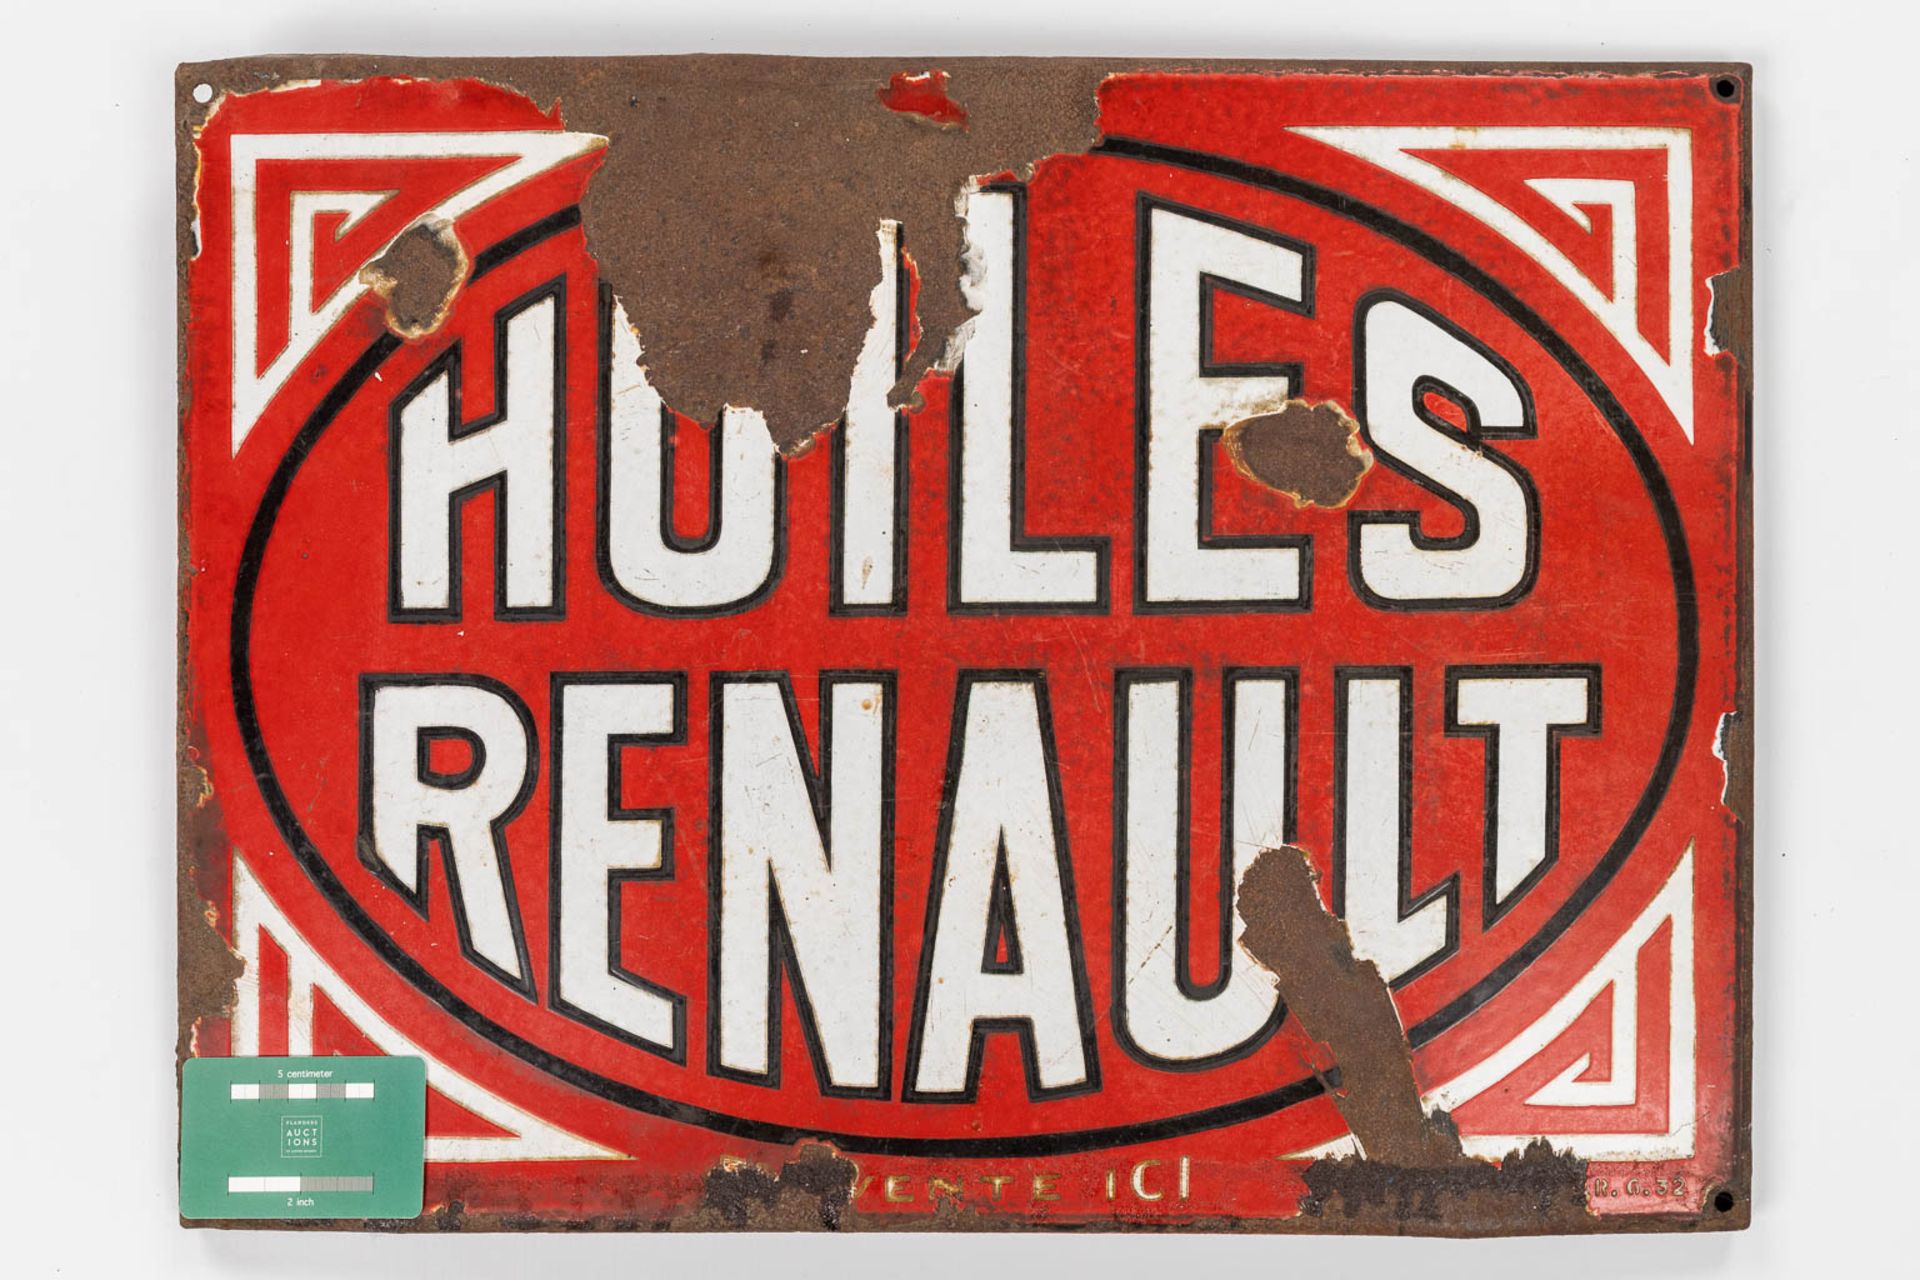 Huiles Renault En Vente Ici, an enamelled plate, 1932. (W: 55 x H: 40 cm) - Image 2 of 7